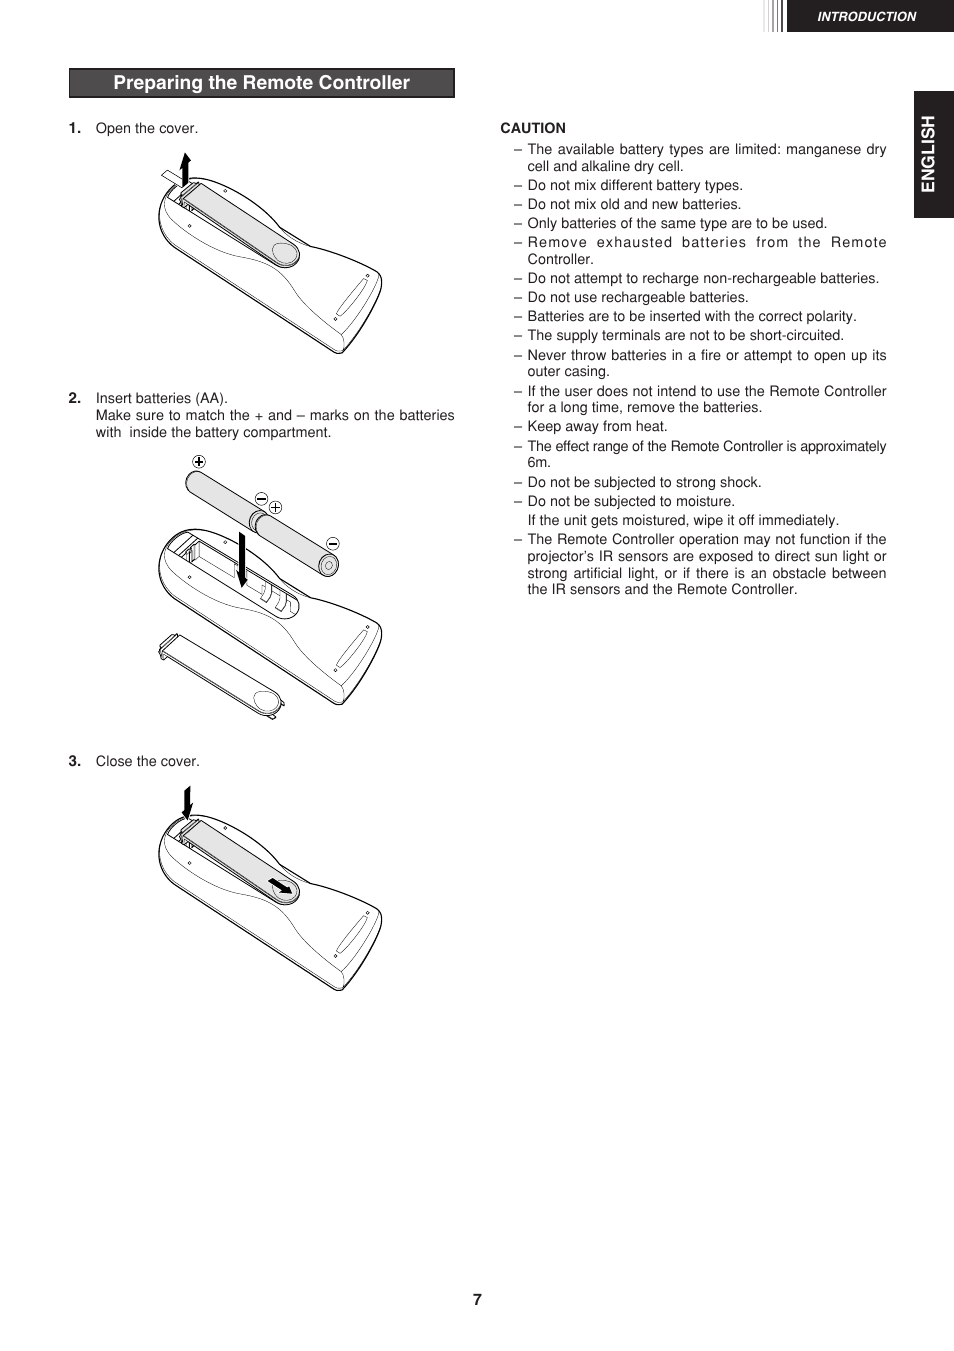 Preparing the remote controller | Marantz VP-12S1s User Manual | Page 11 / 30